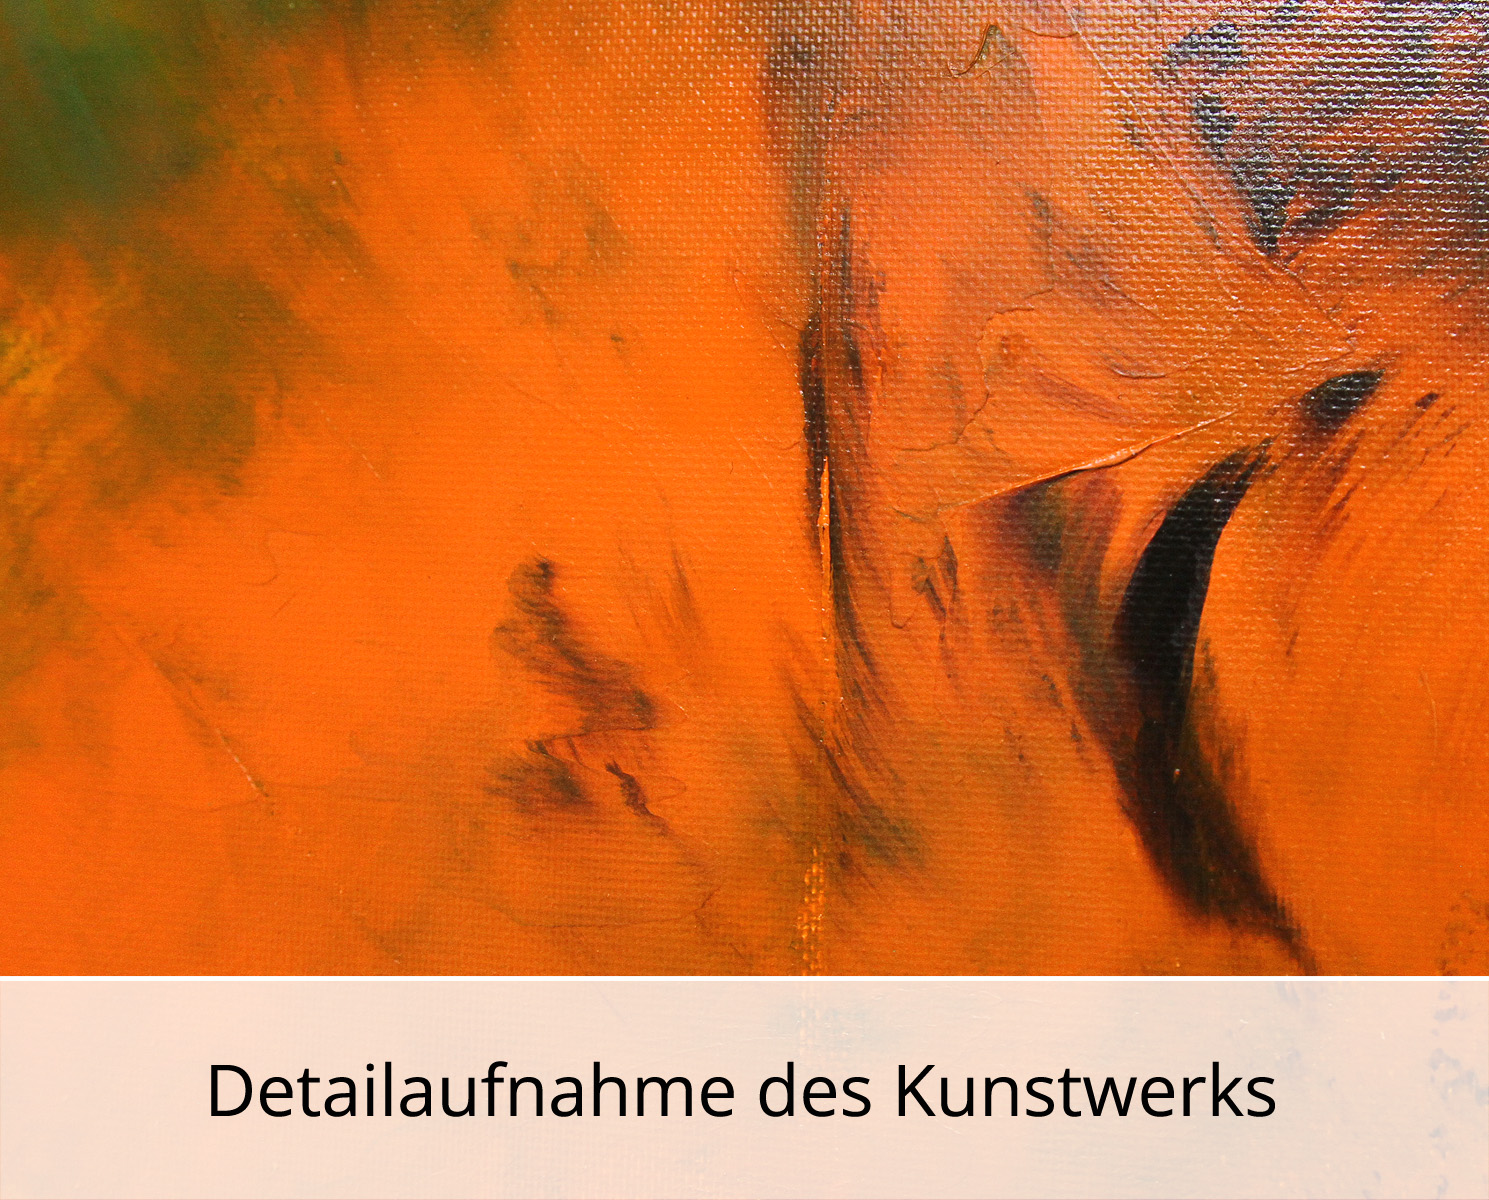 C. Middendorf: "Kletterwand", abstraktes Originalgemälde (Unikat)